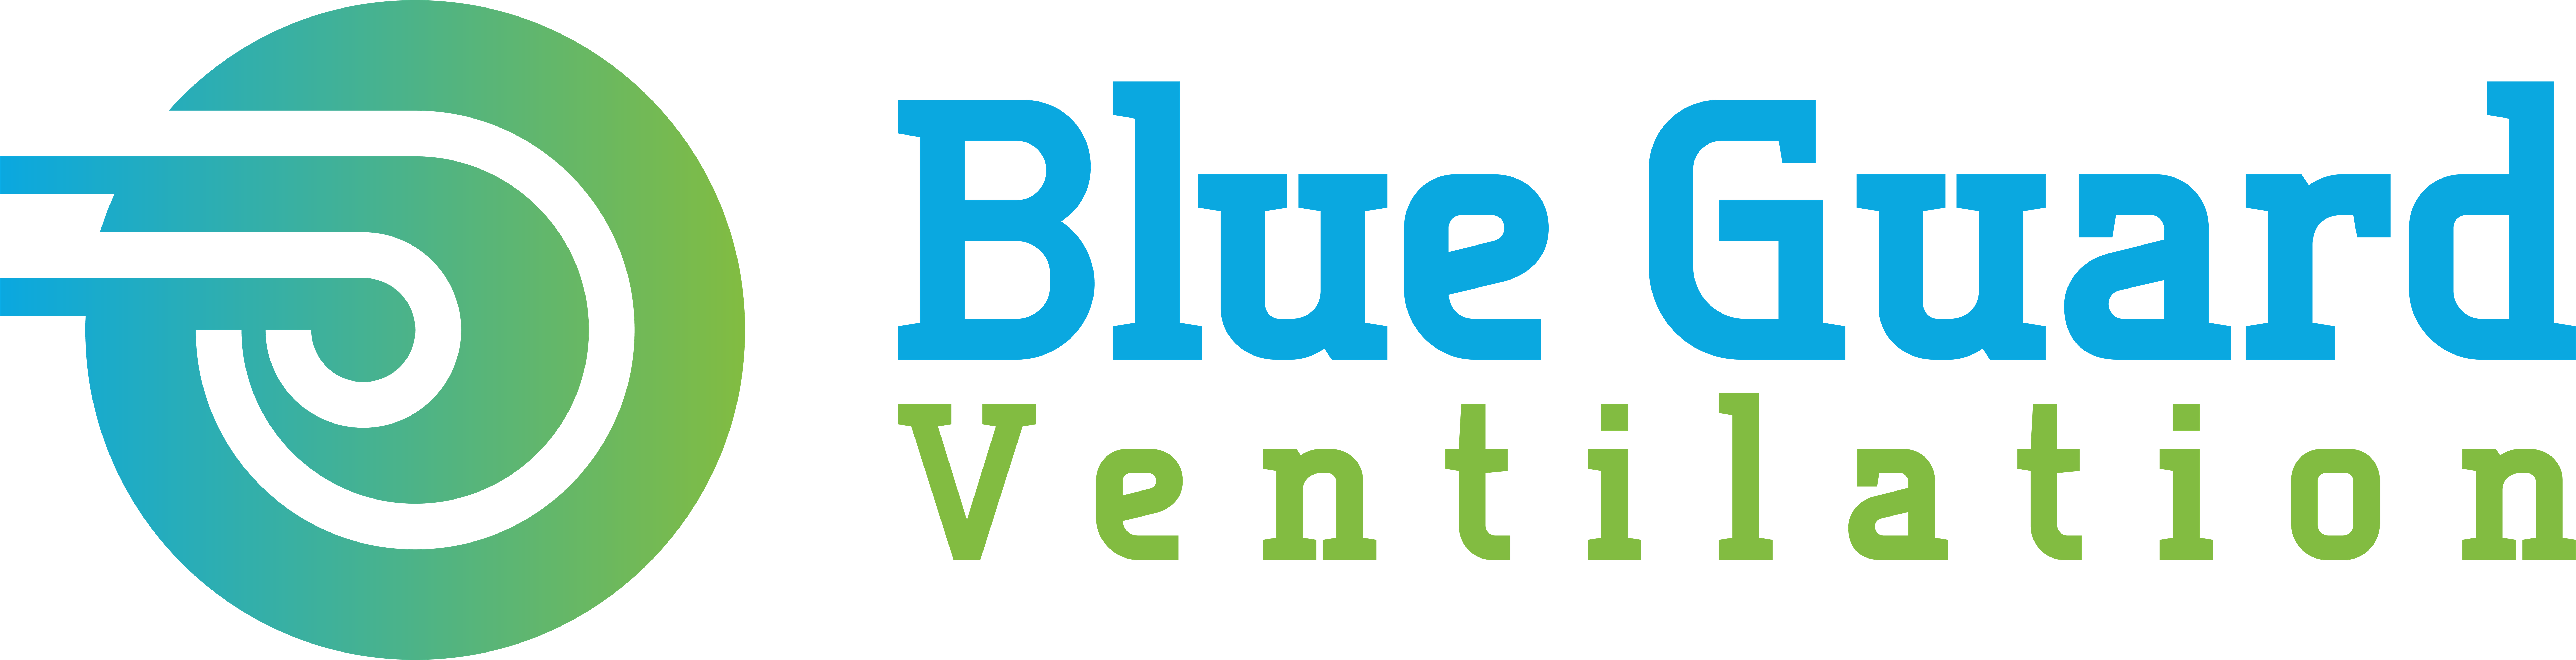 blueguard ventilations logo